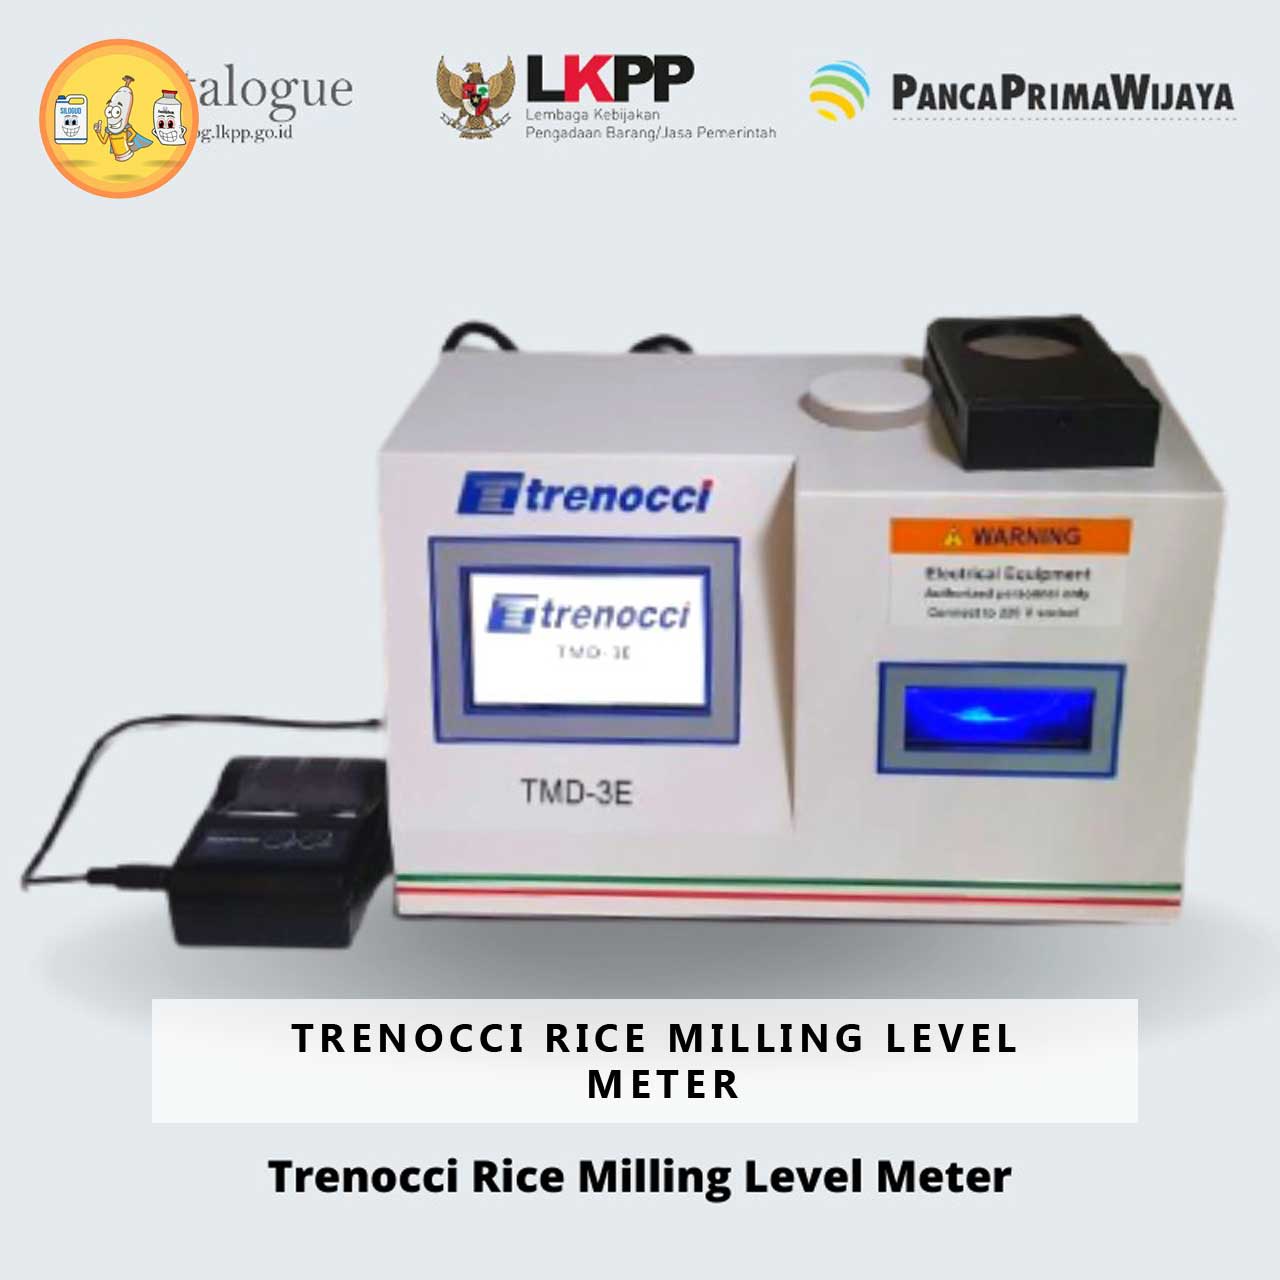 Trenocci Rice Milling Level Meter